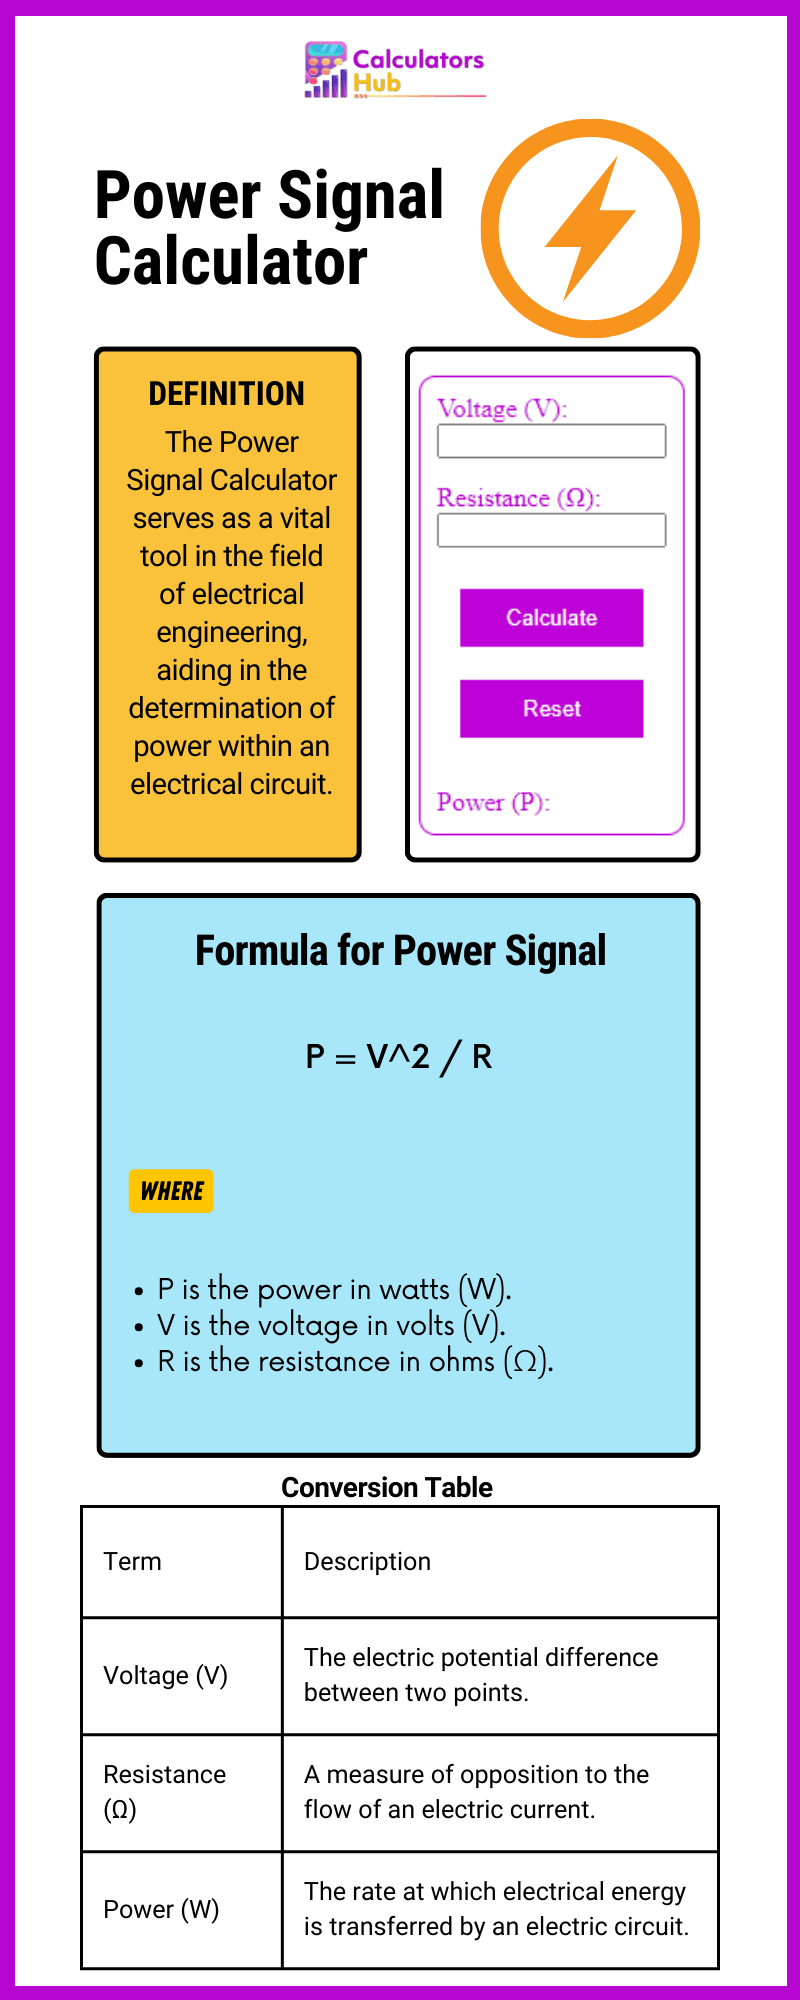 Power Signal Calculator